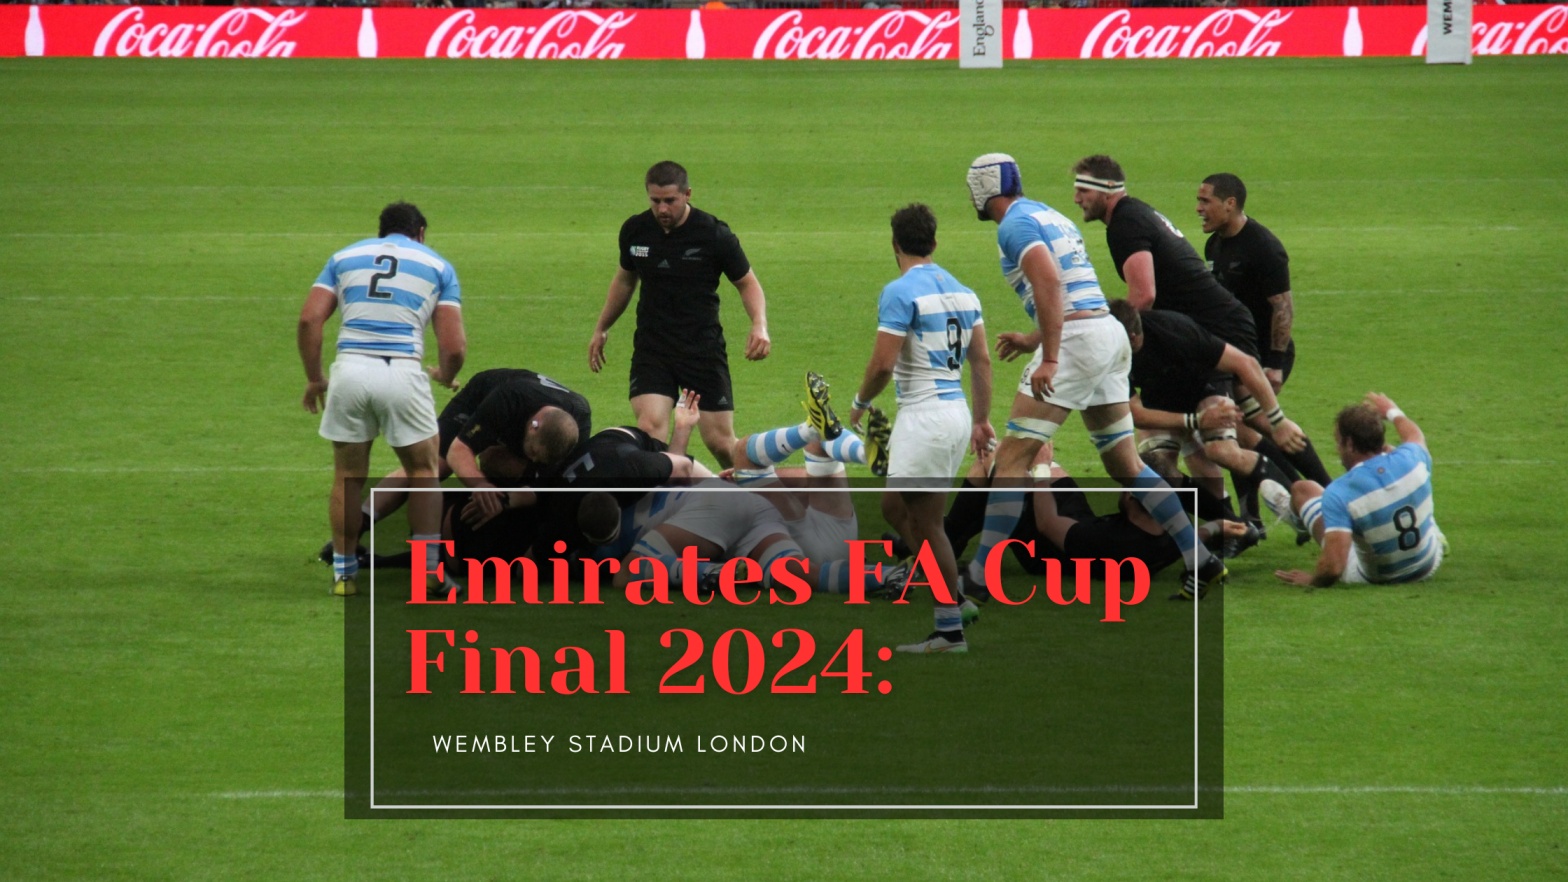 The Emirates FA Cup Final 2024: Wembley Stadium London